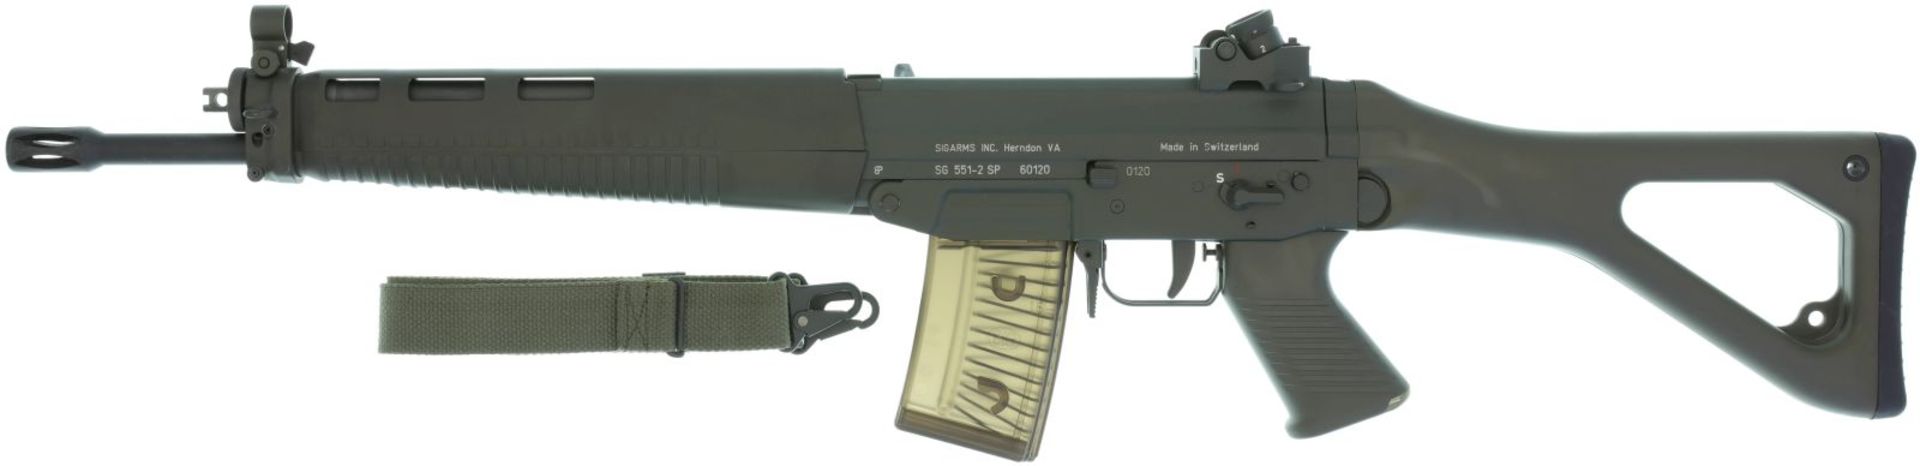 Sturmgewehr, SIG SG 551-2 SP, Kal. .223Rem@ LL 390mm, TL 870mm. Exportmodell mit linksseitiger